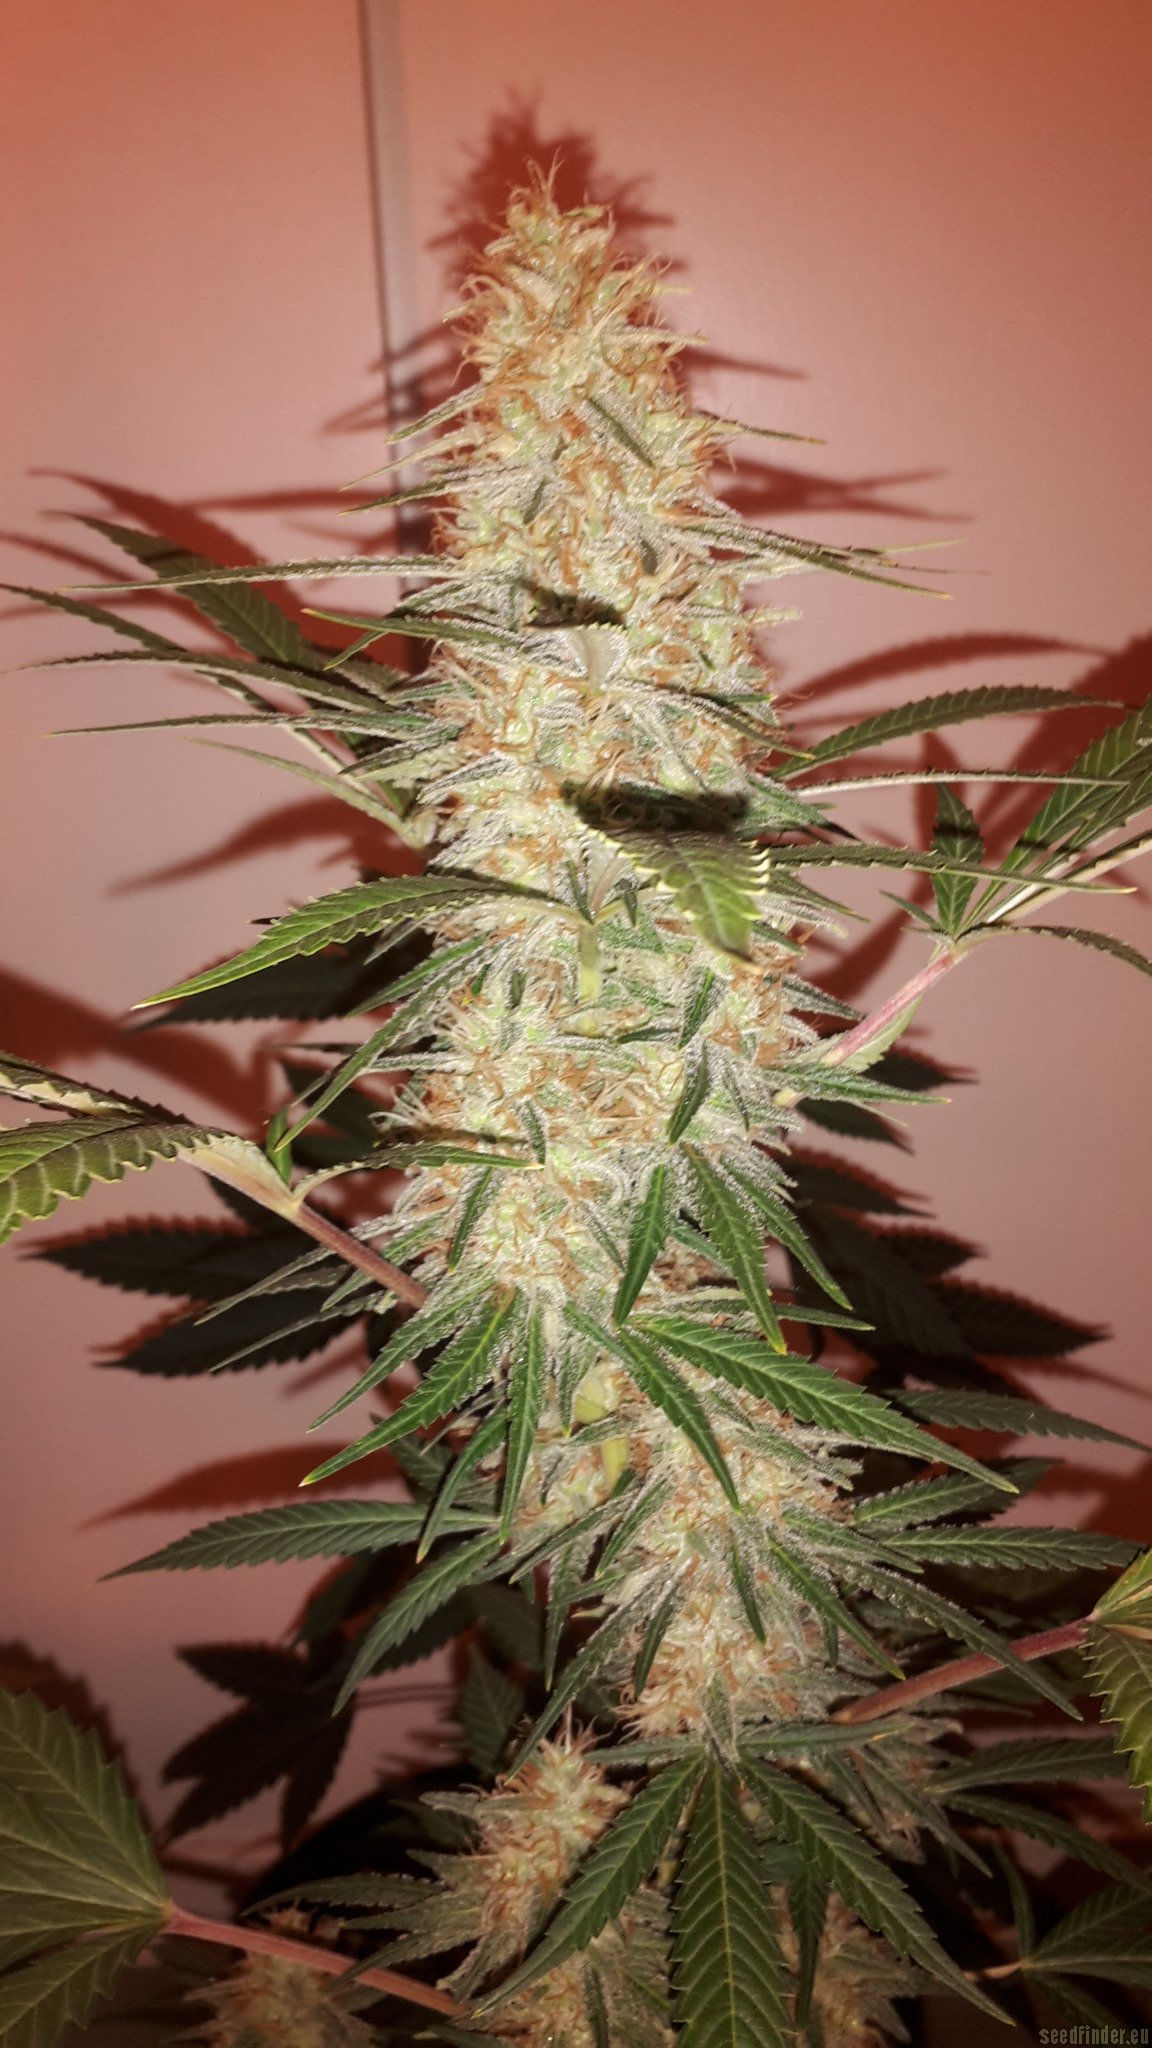 Jack Herer (Sensi Seeds) :: Cannabis Strain Info